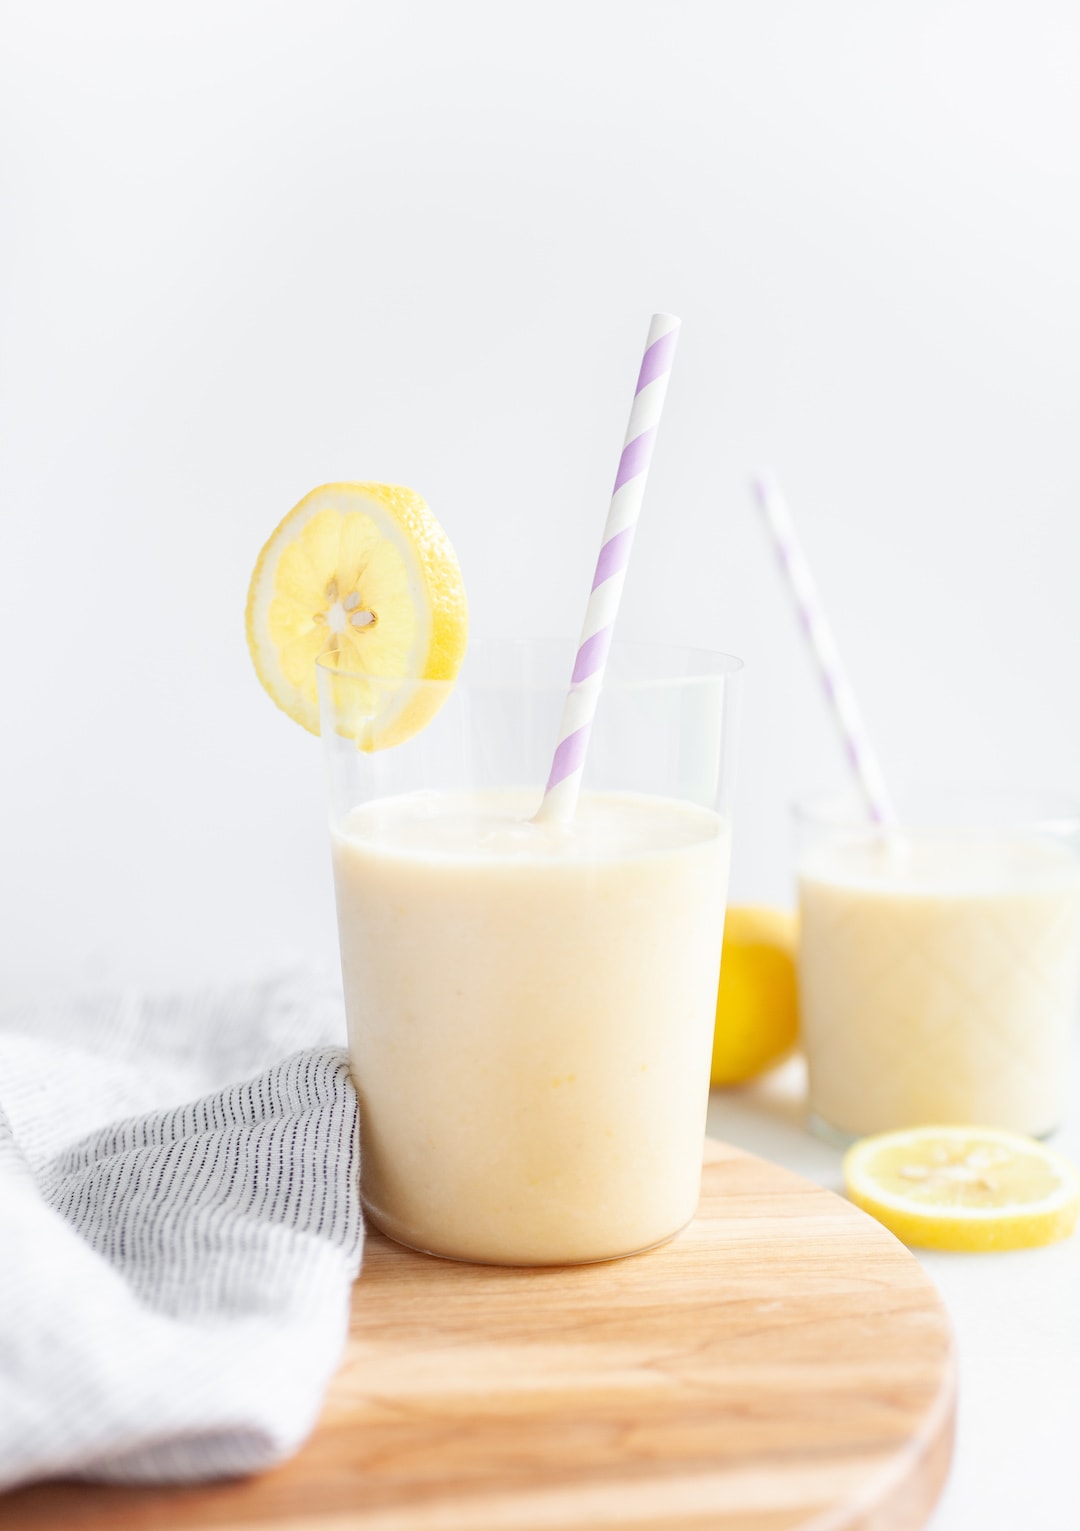 glass of banana peach lemon smoothie with lemon wedge and purple straw